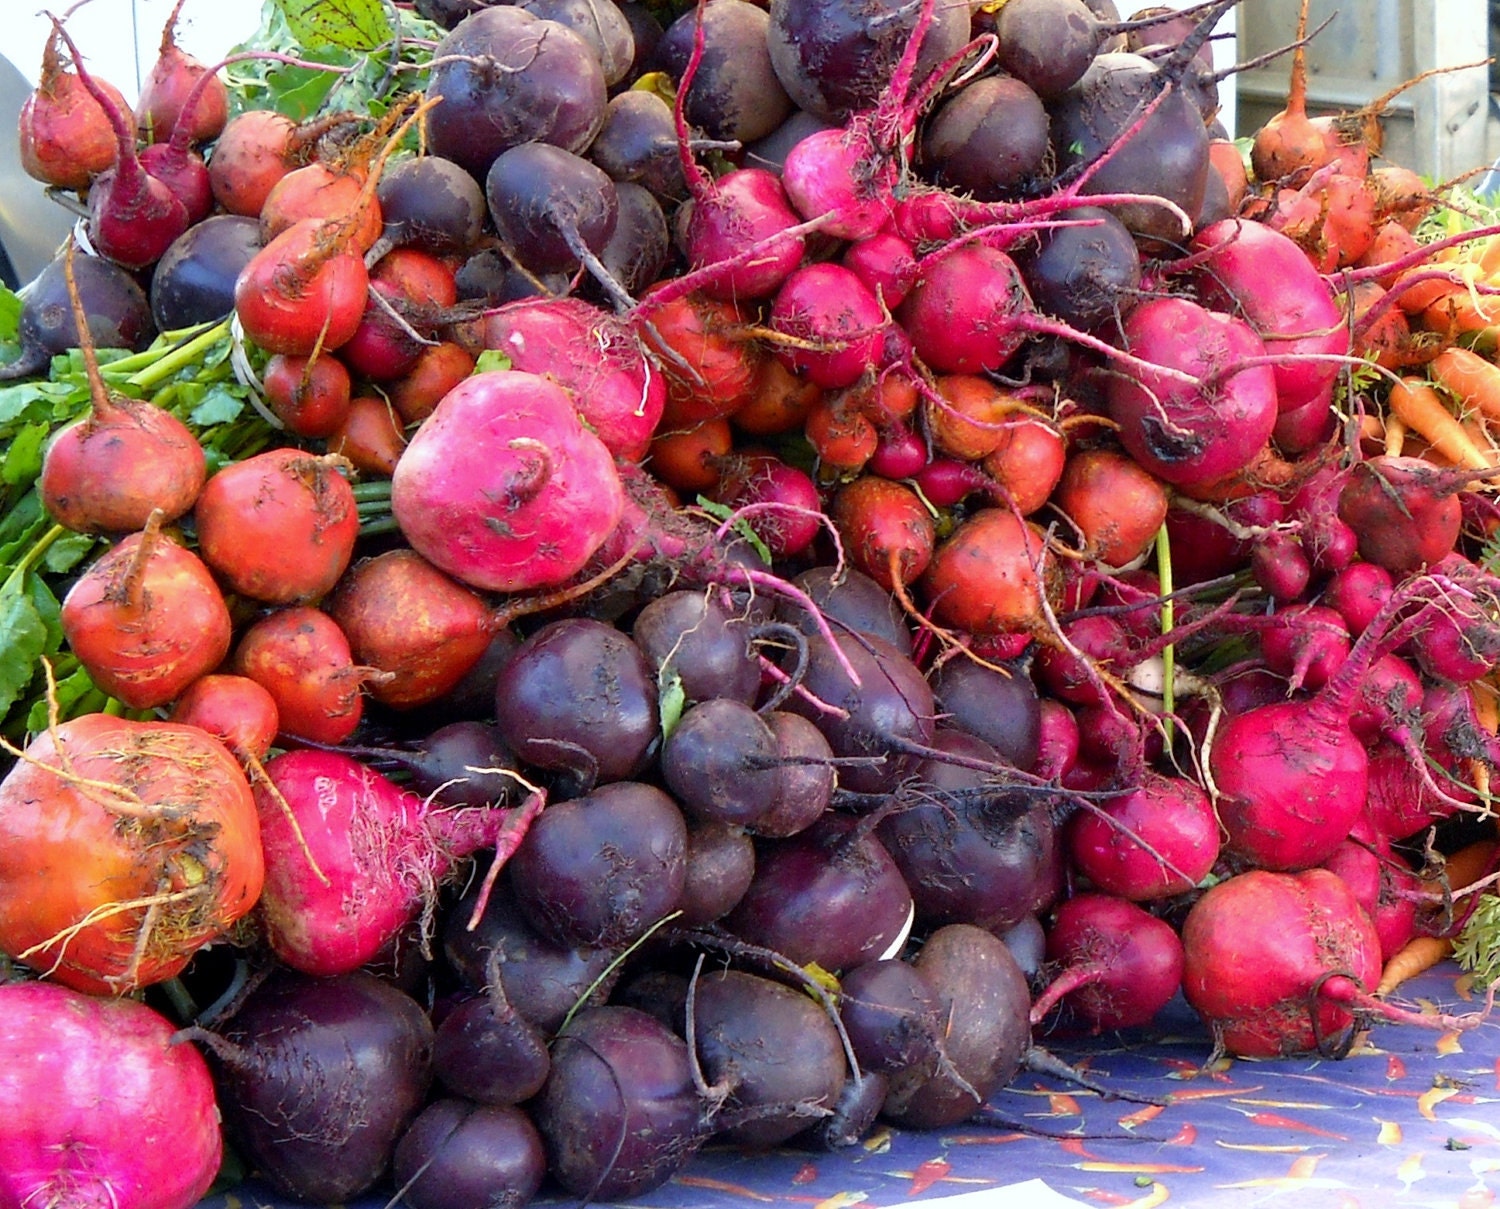 Veggies Beets Radishes Photo Farmers Market Gift Napa Kitchen Home Decor 8x10 - WildInspirationPhoto